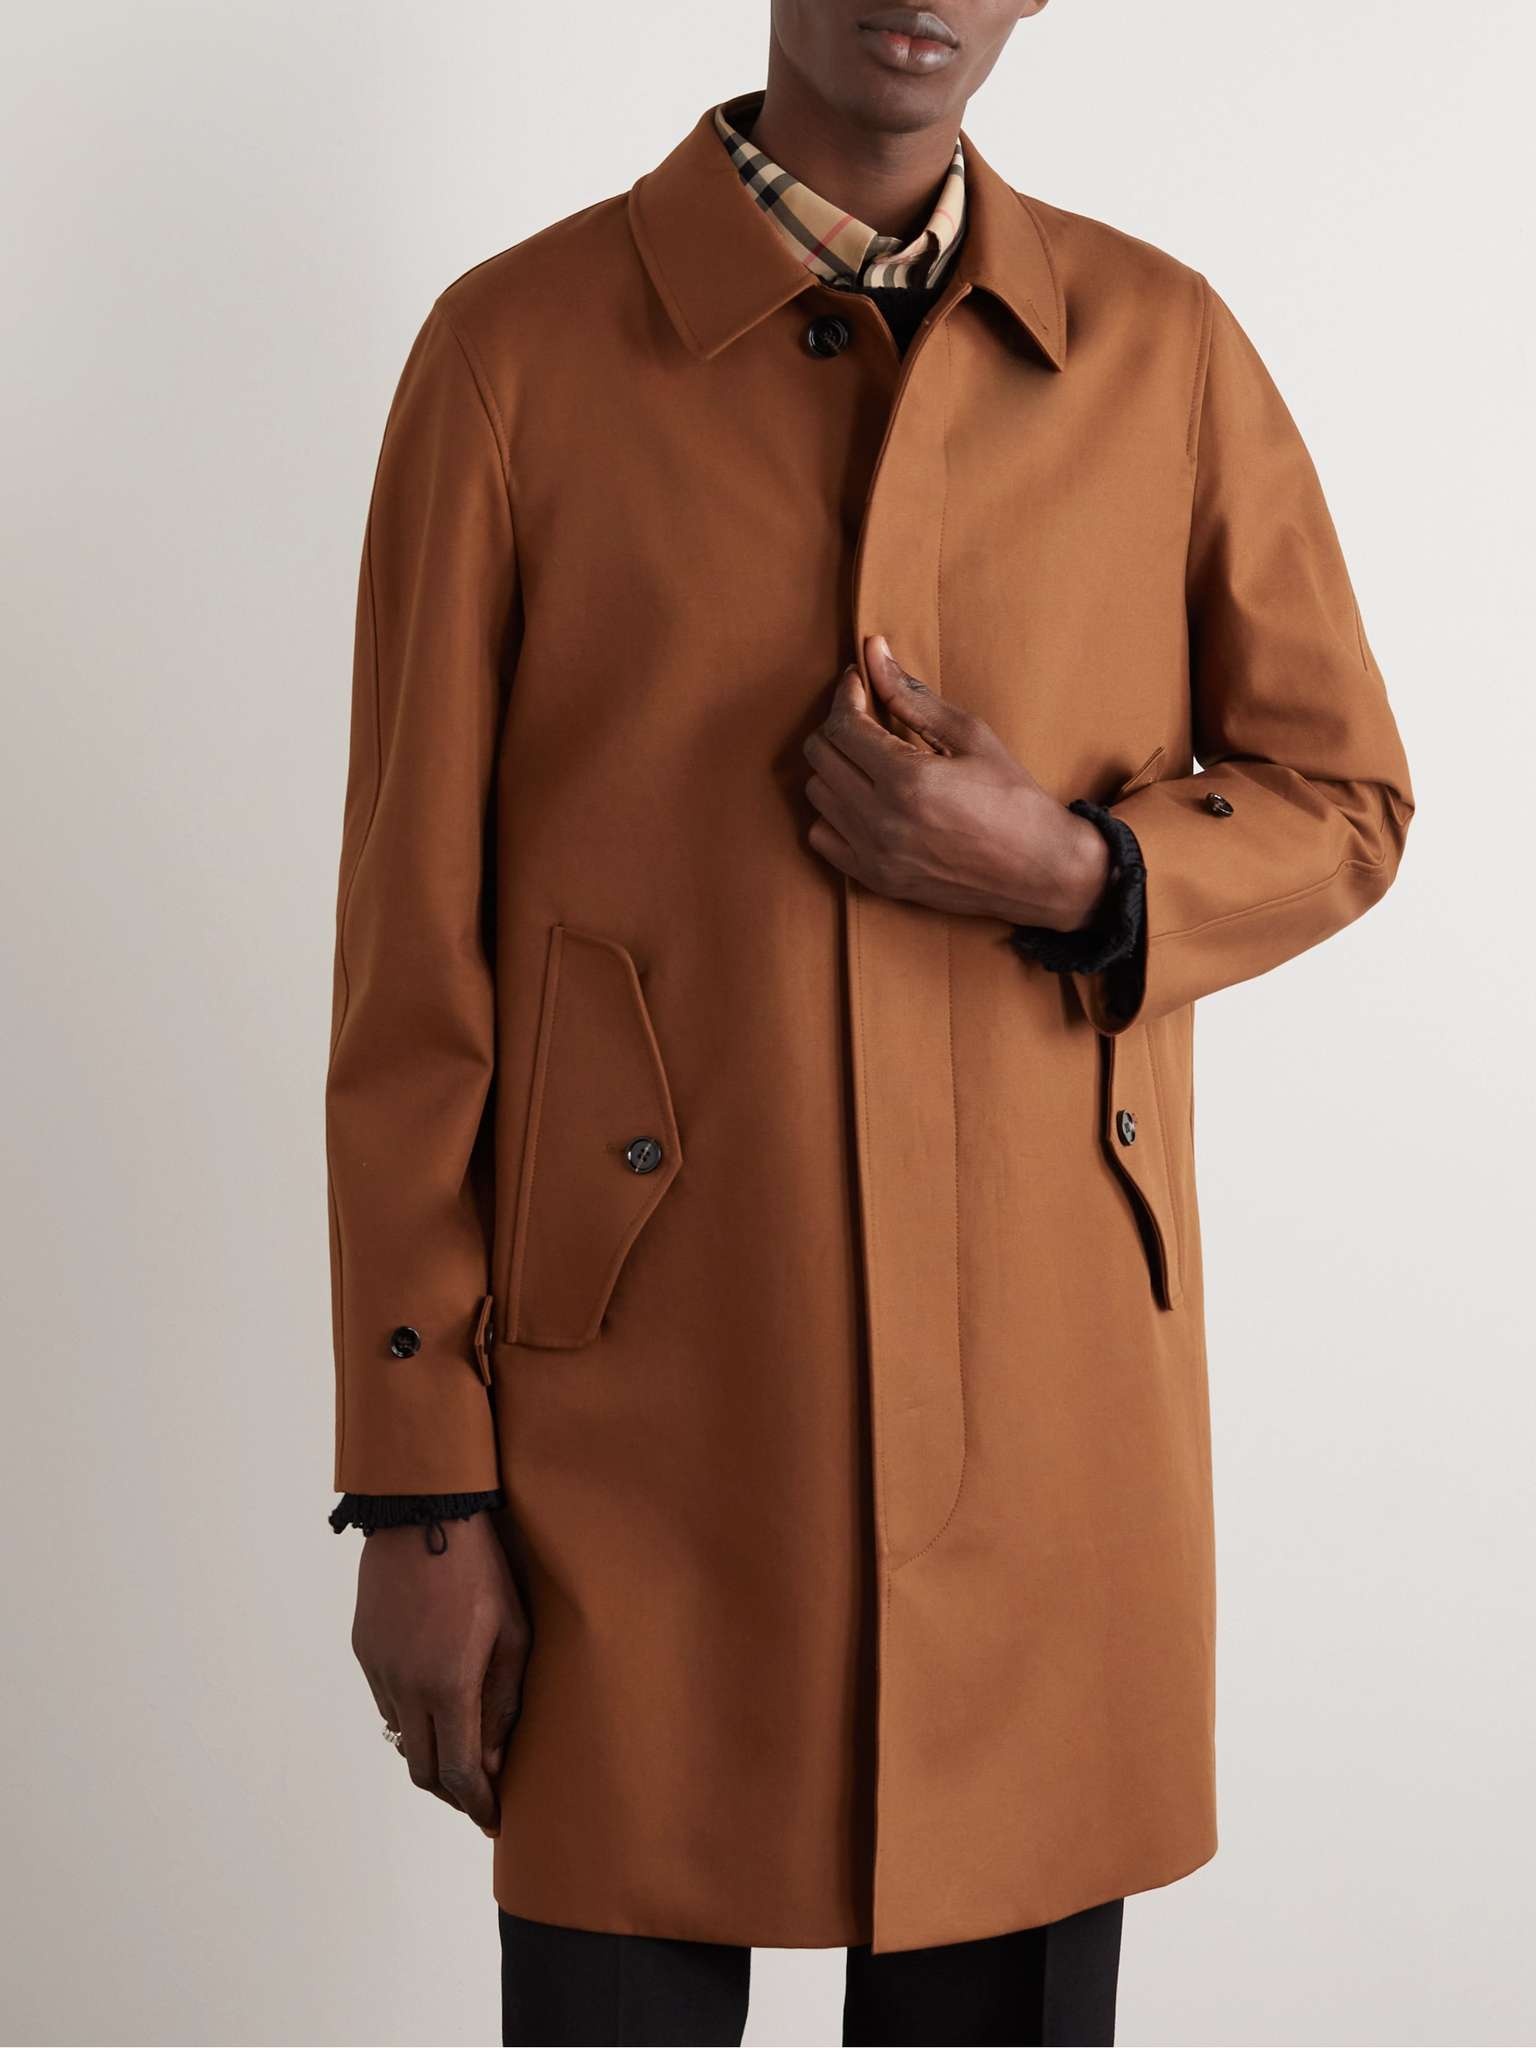 Burberry, Jackets & Coats, Burberry Reversible Wool Cape